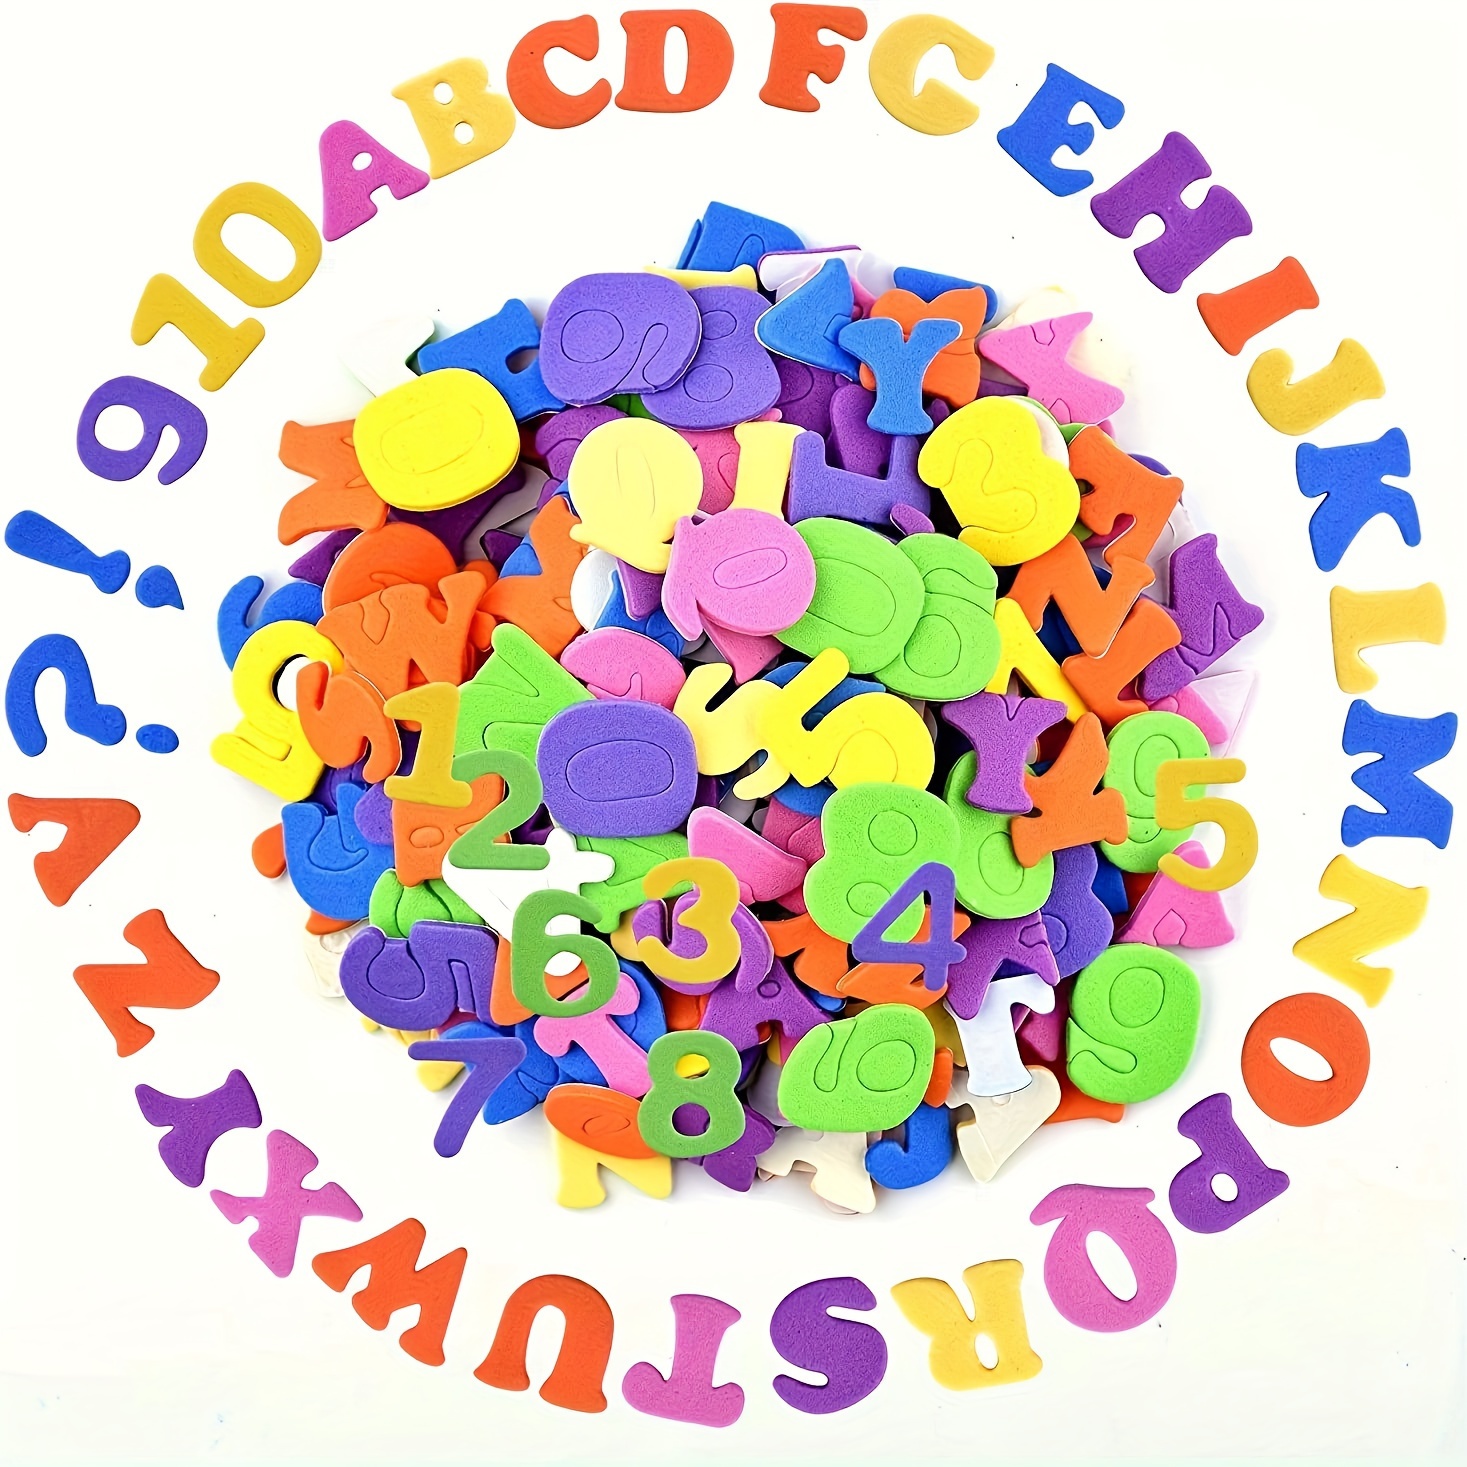 28pcs/lot Colorful English Alphabet Glitter Foam Self-Adhesive EVA